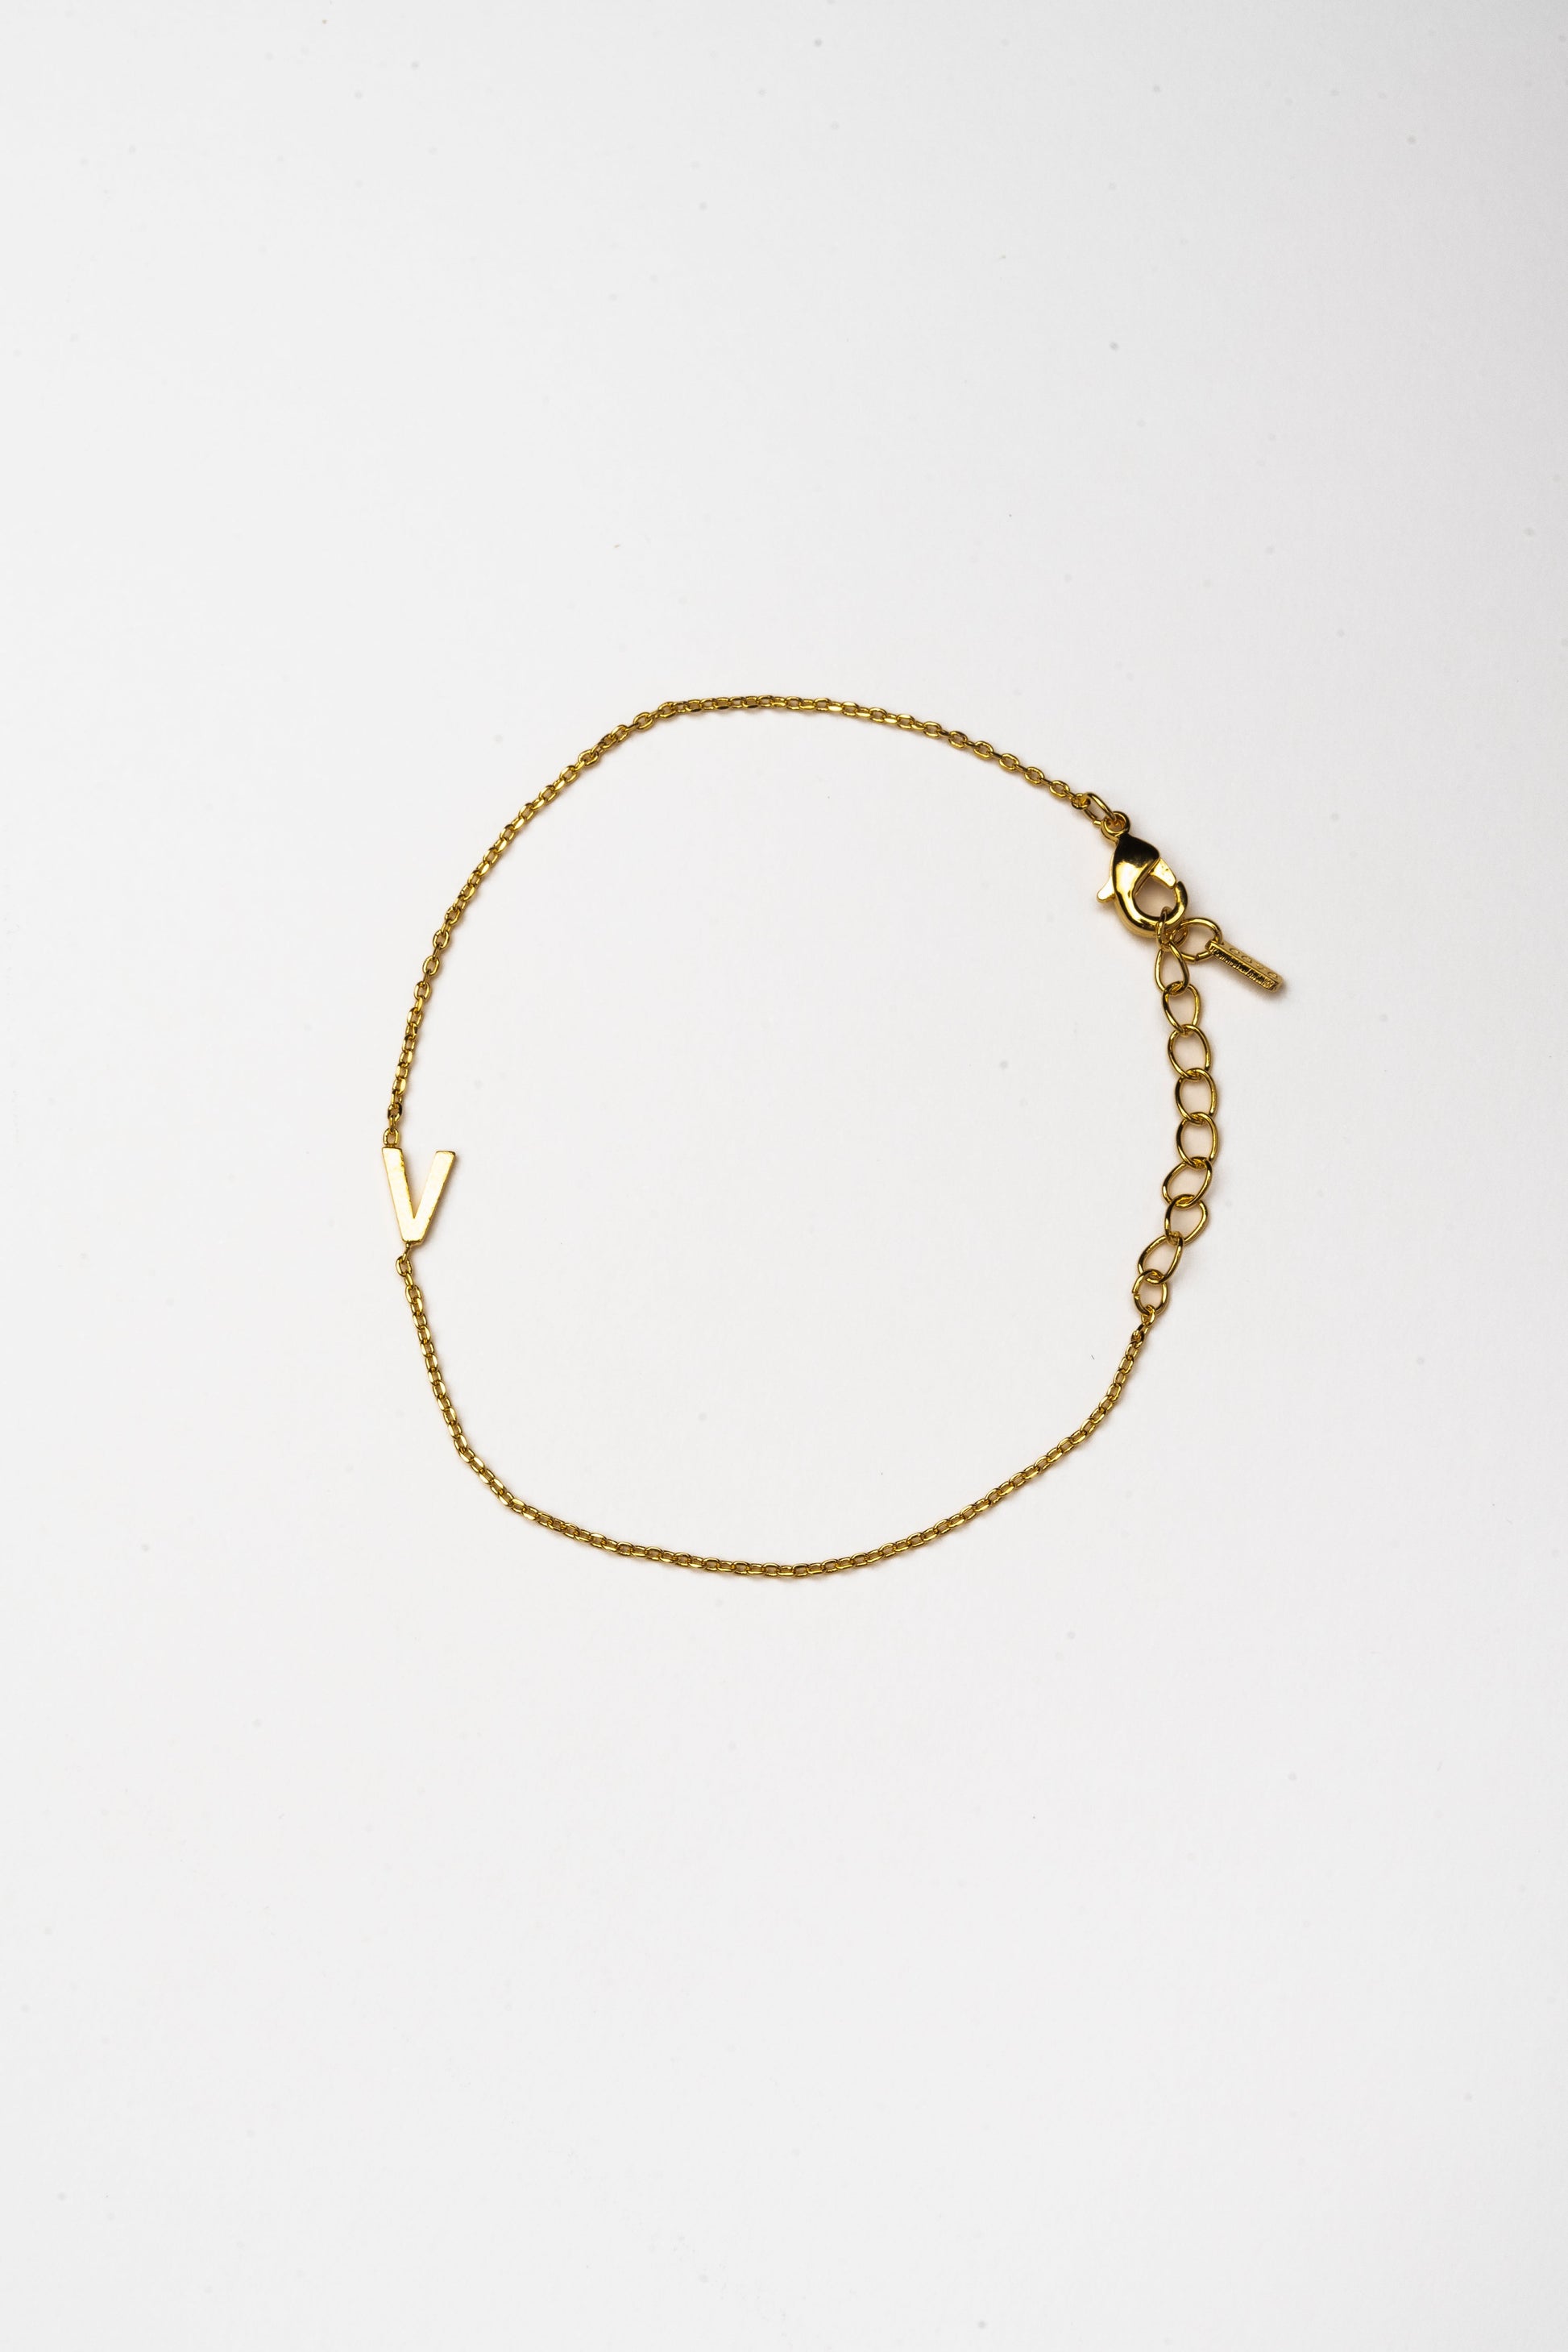 Cove Initial Bracelet WOMEN'S BRACELET Cove Accessories 18k Gold Plated 7" + 1" extender V